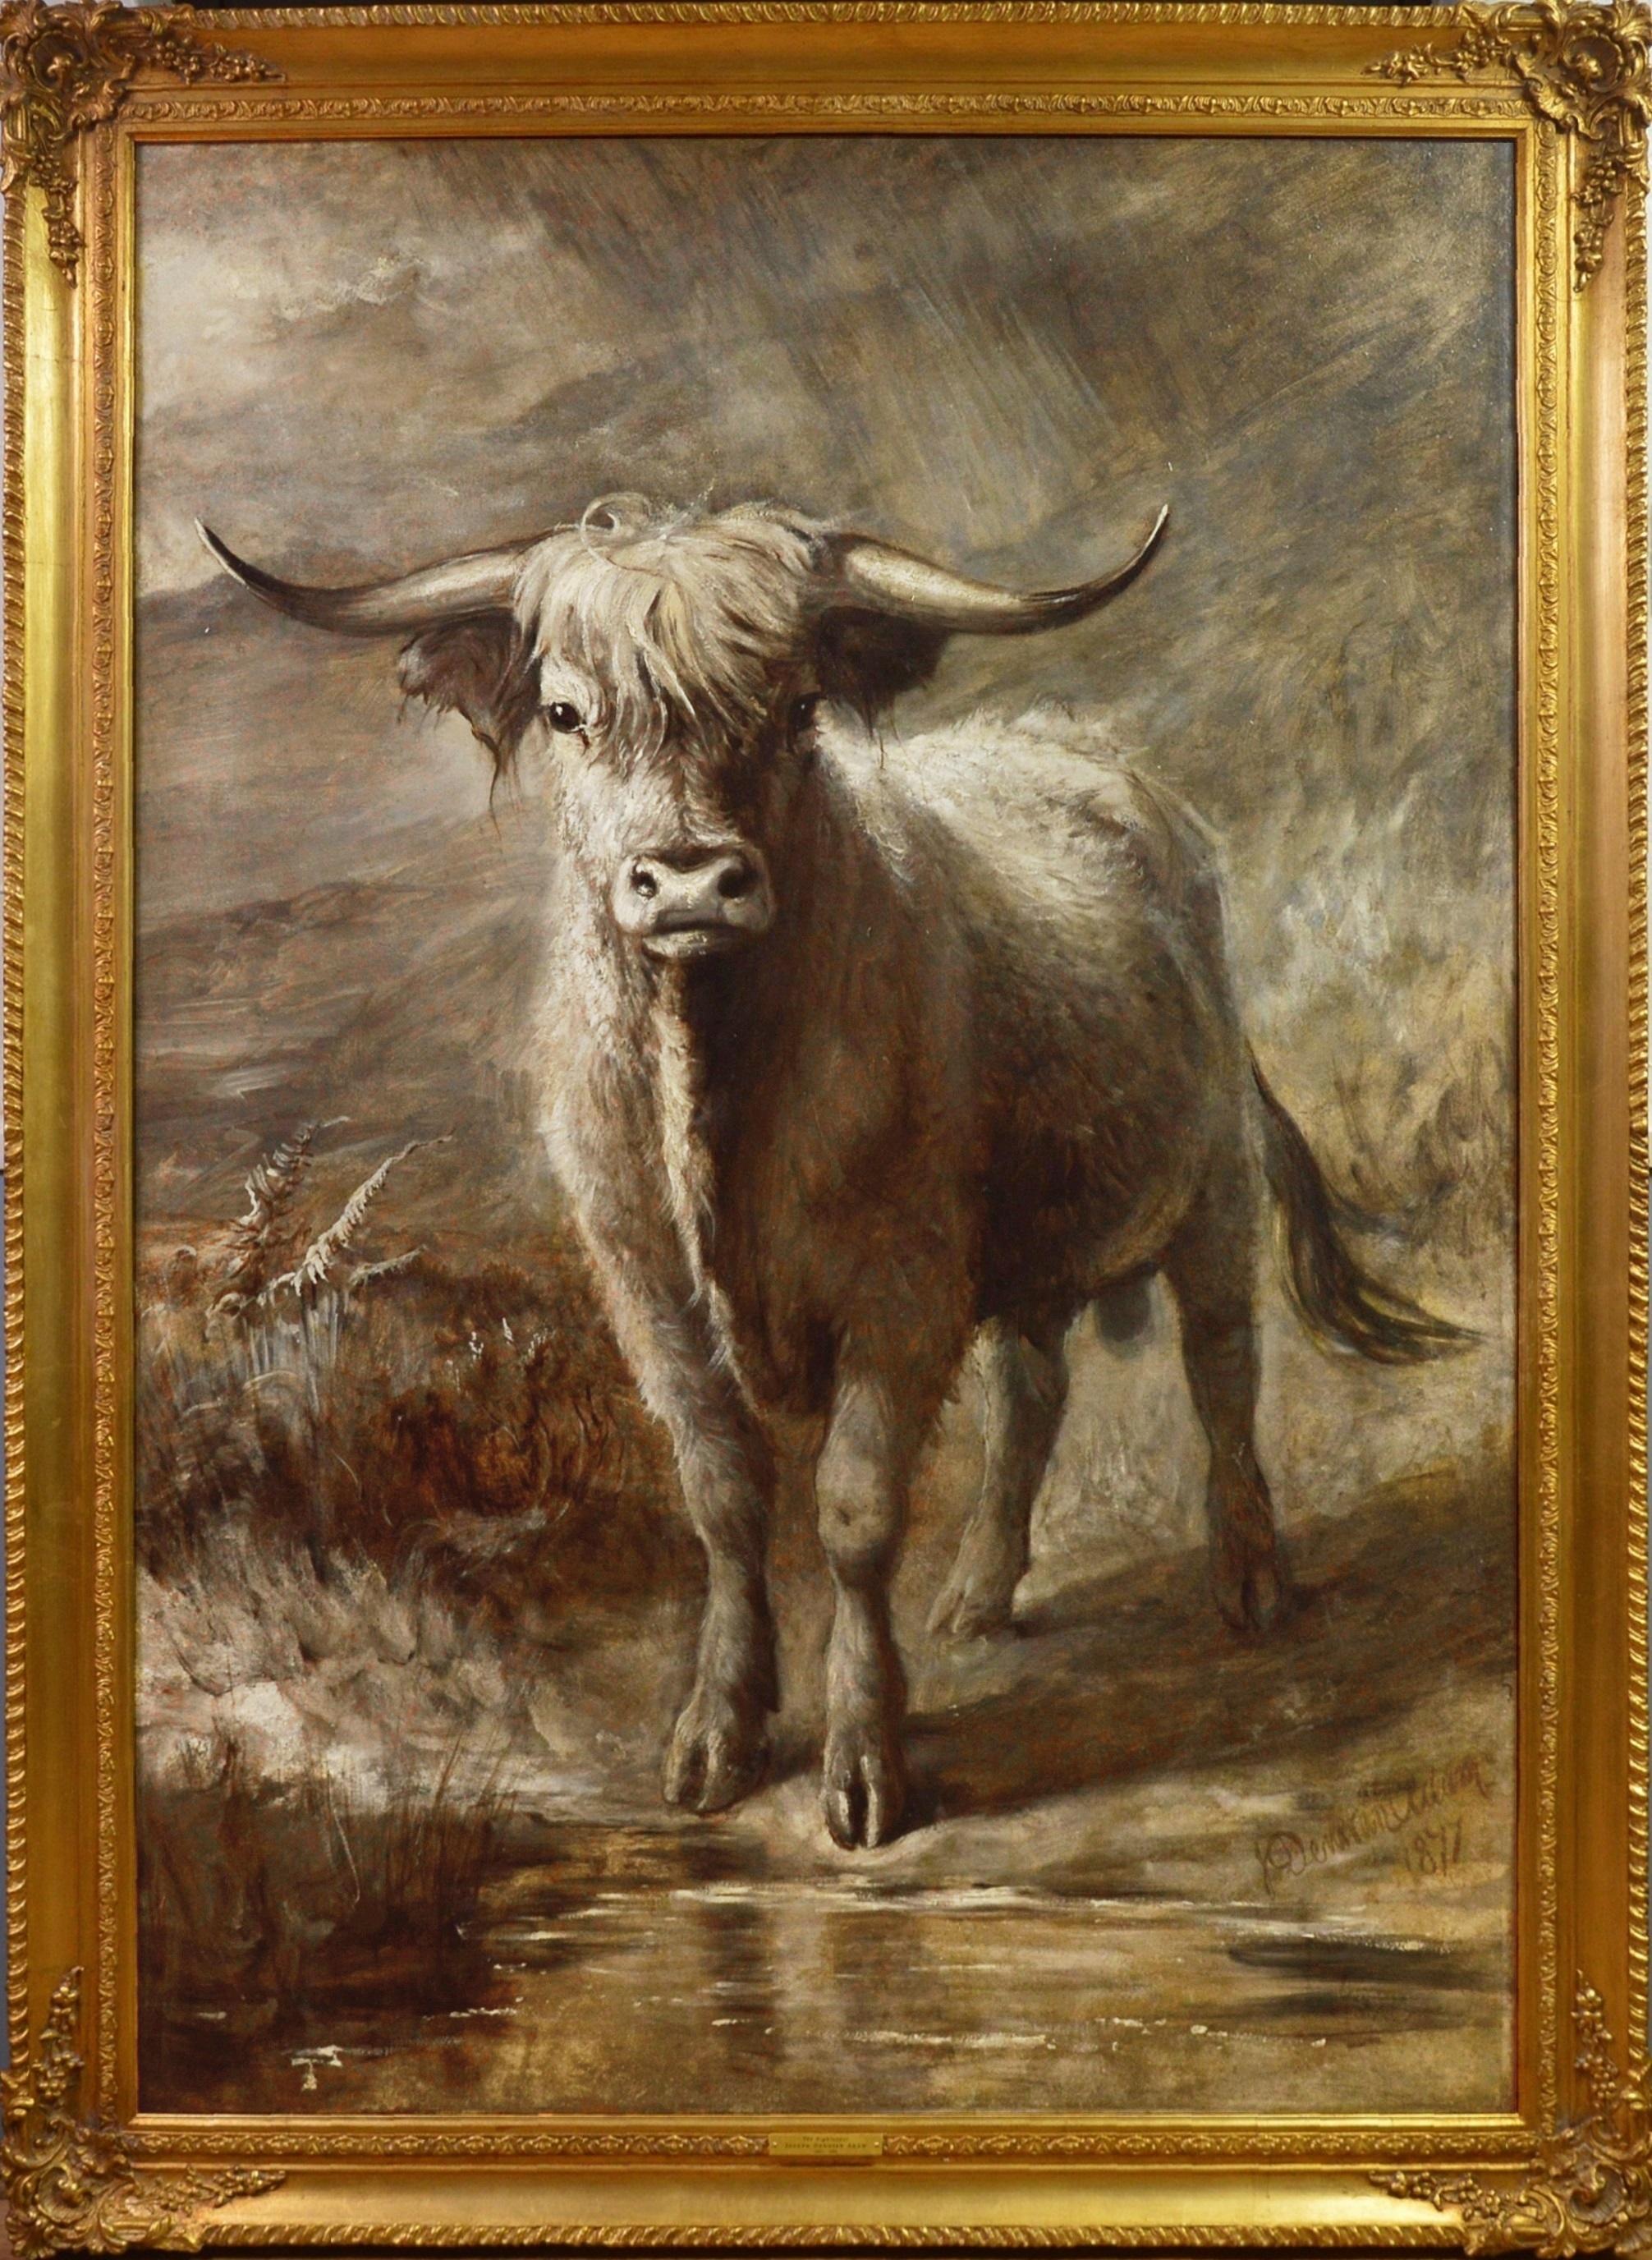 Joseph Denovan Adam Landscape Painting - The Highlander - 19th Century Portrait Oil Painting of Scottish Highland Bull